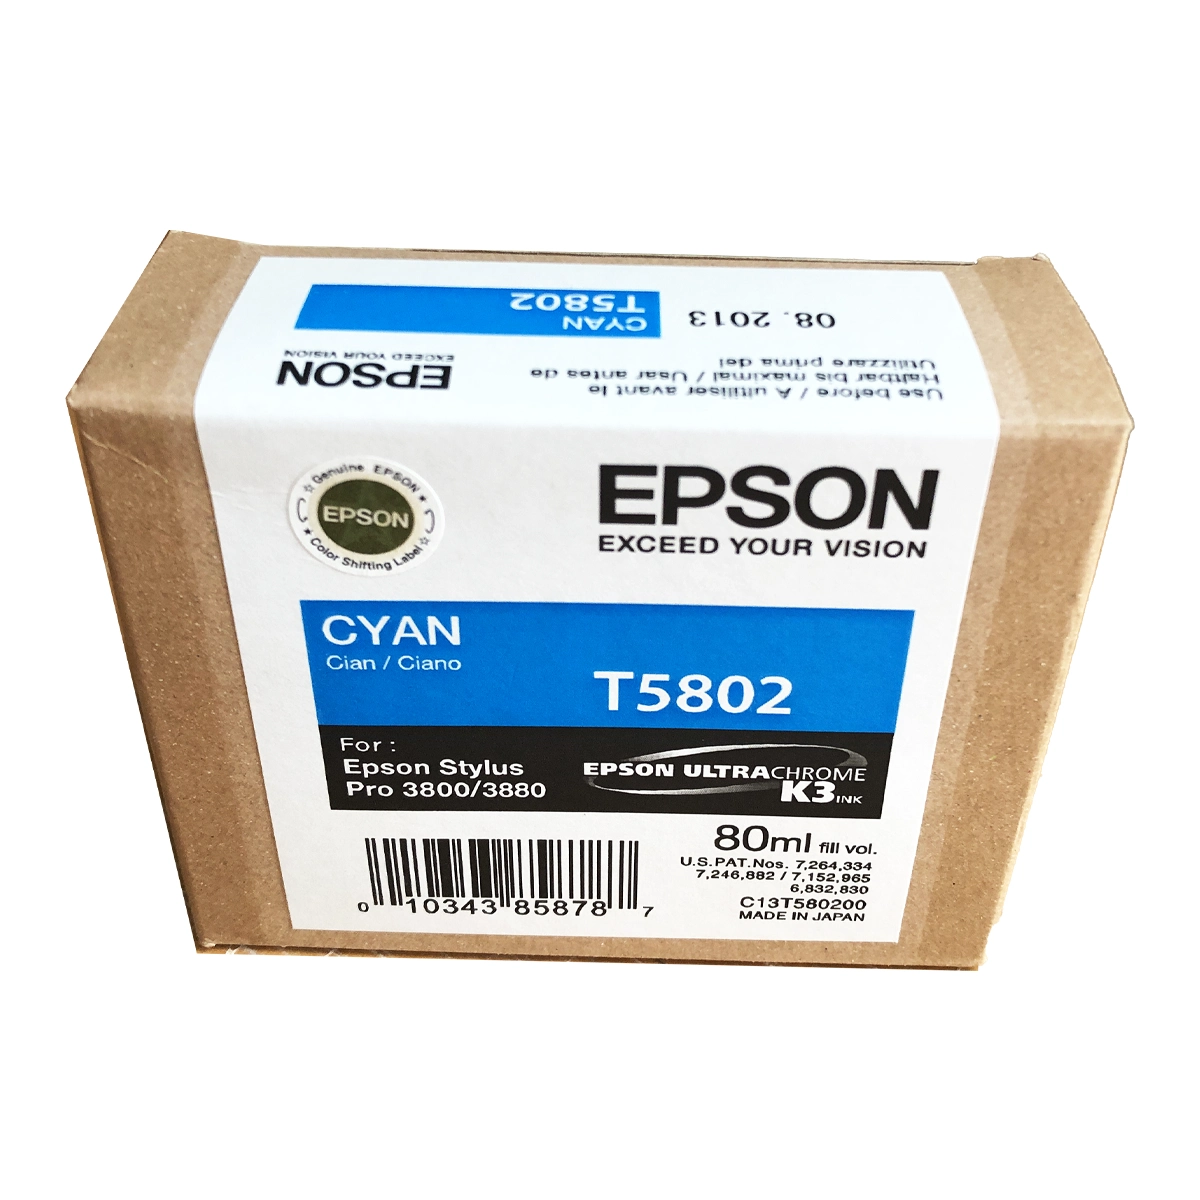 epson stylus photo 3800 3880 cyan ink cartridge new in box